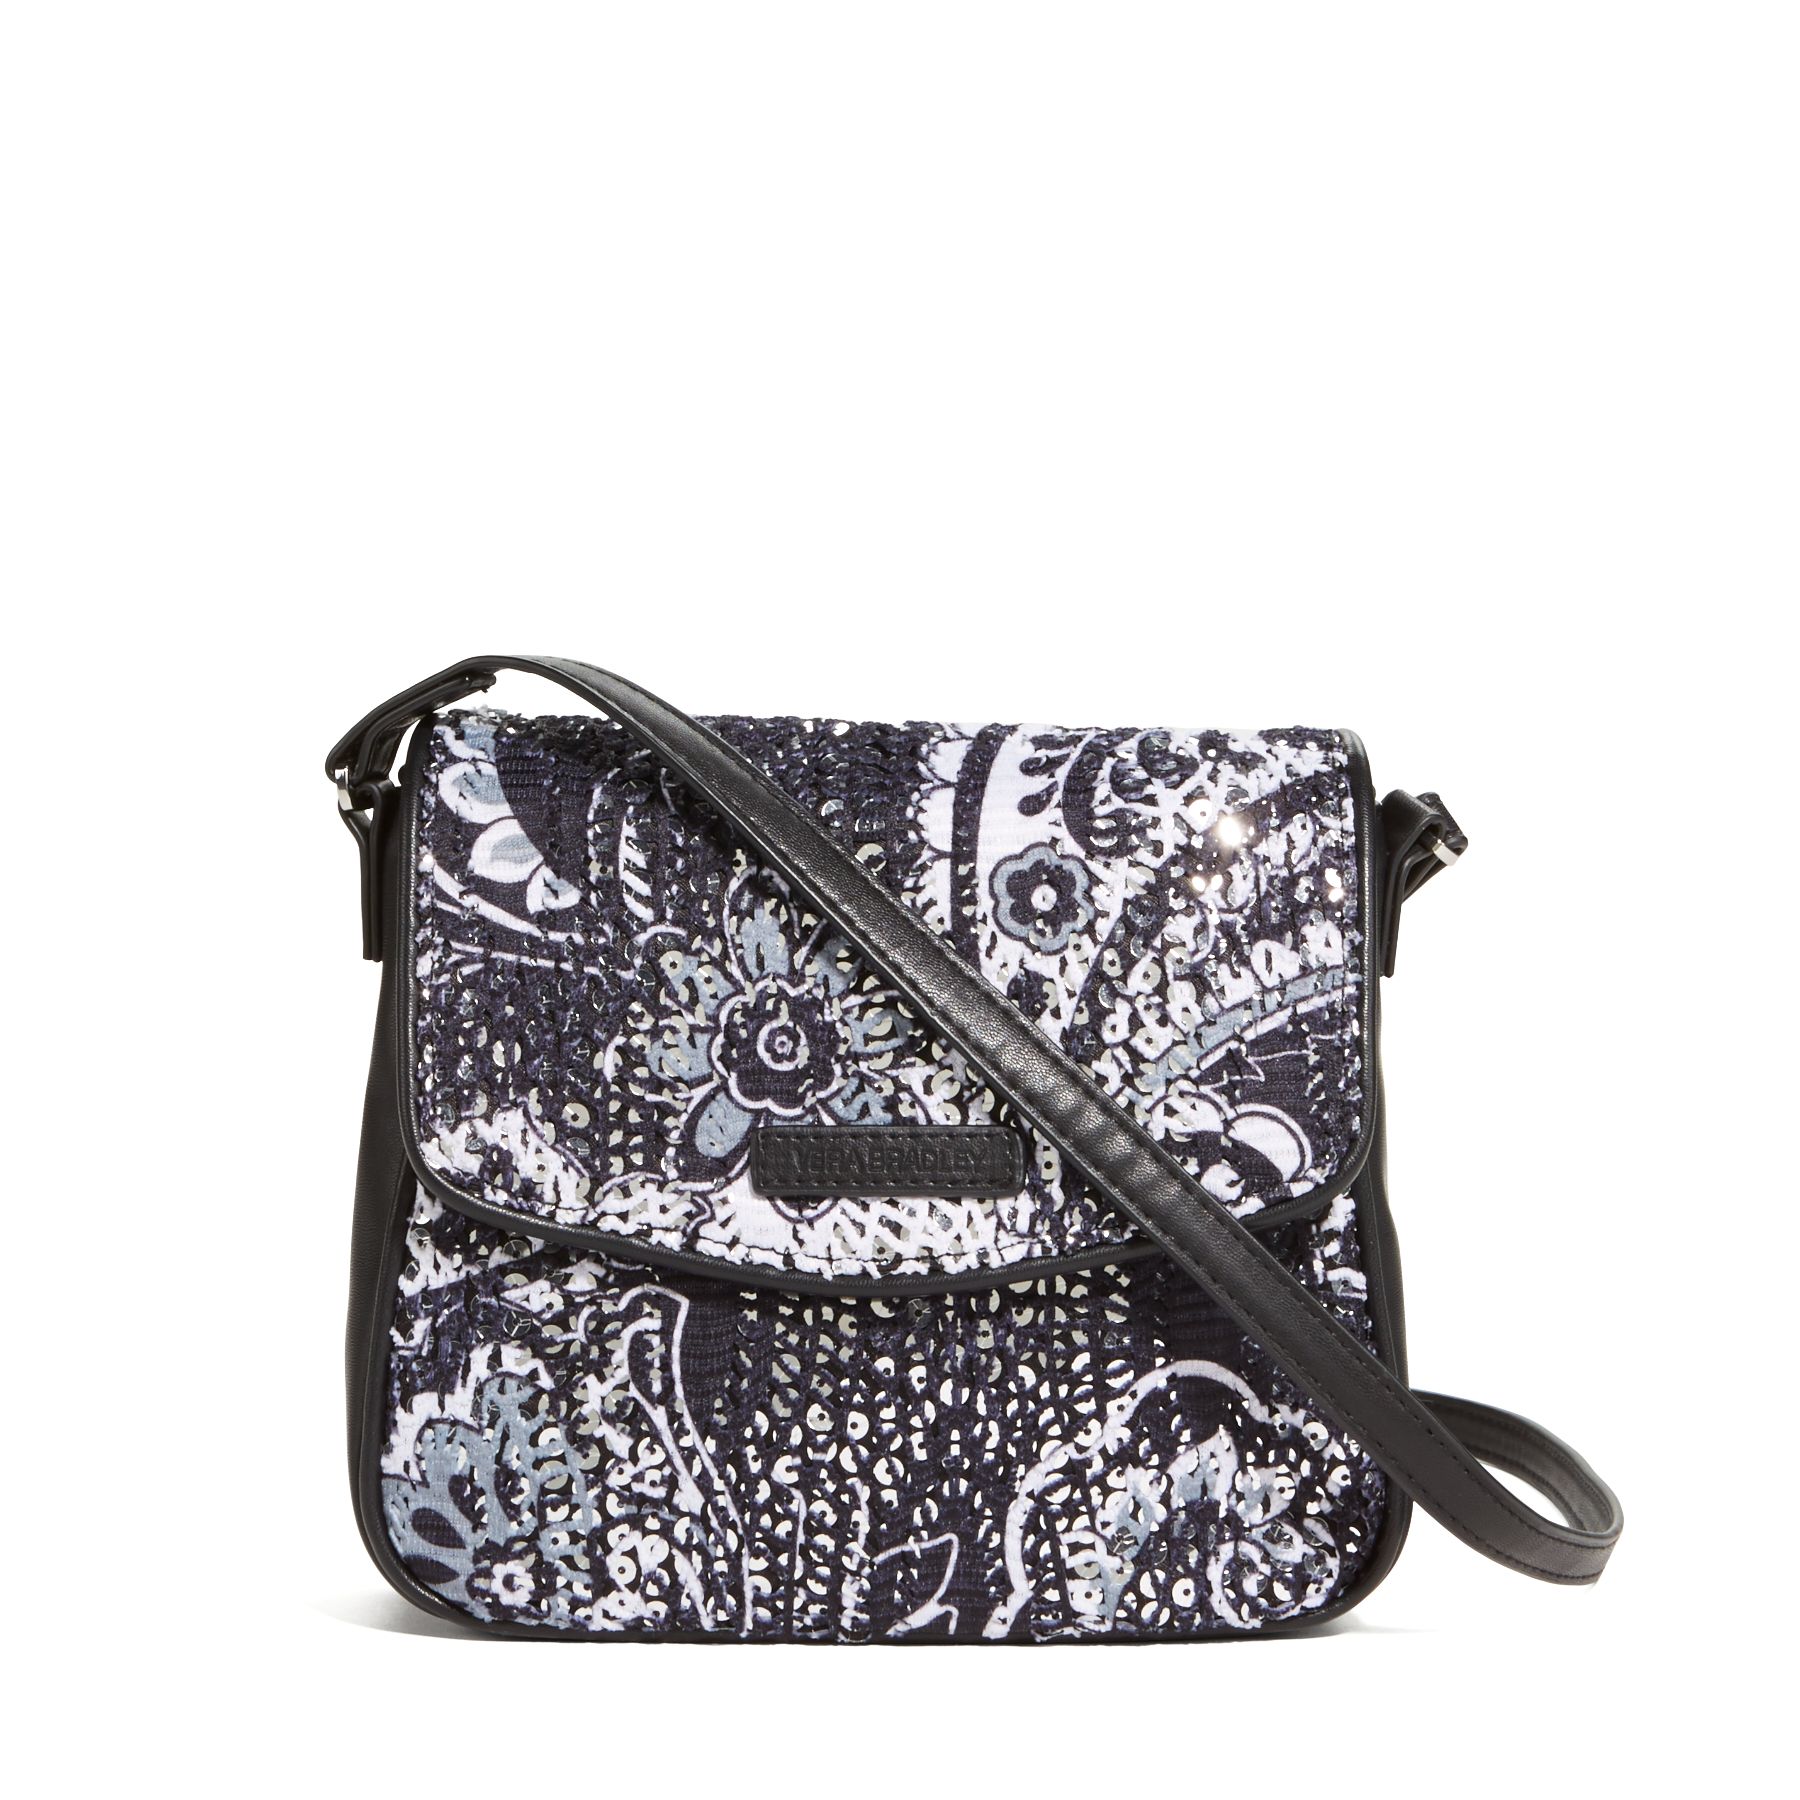 Vera Bradley Sparkle Crossbody Bag | eBay